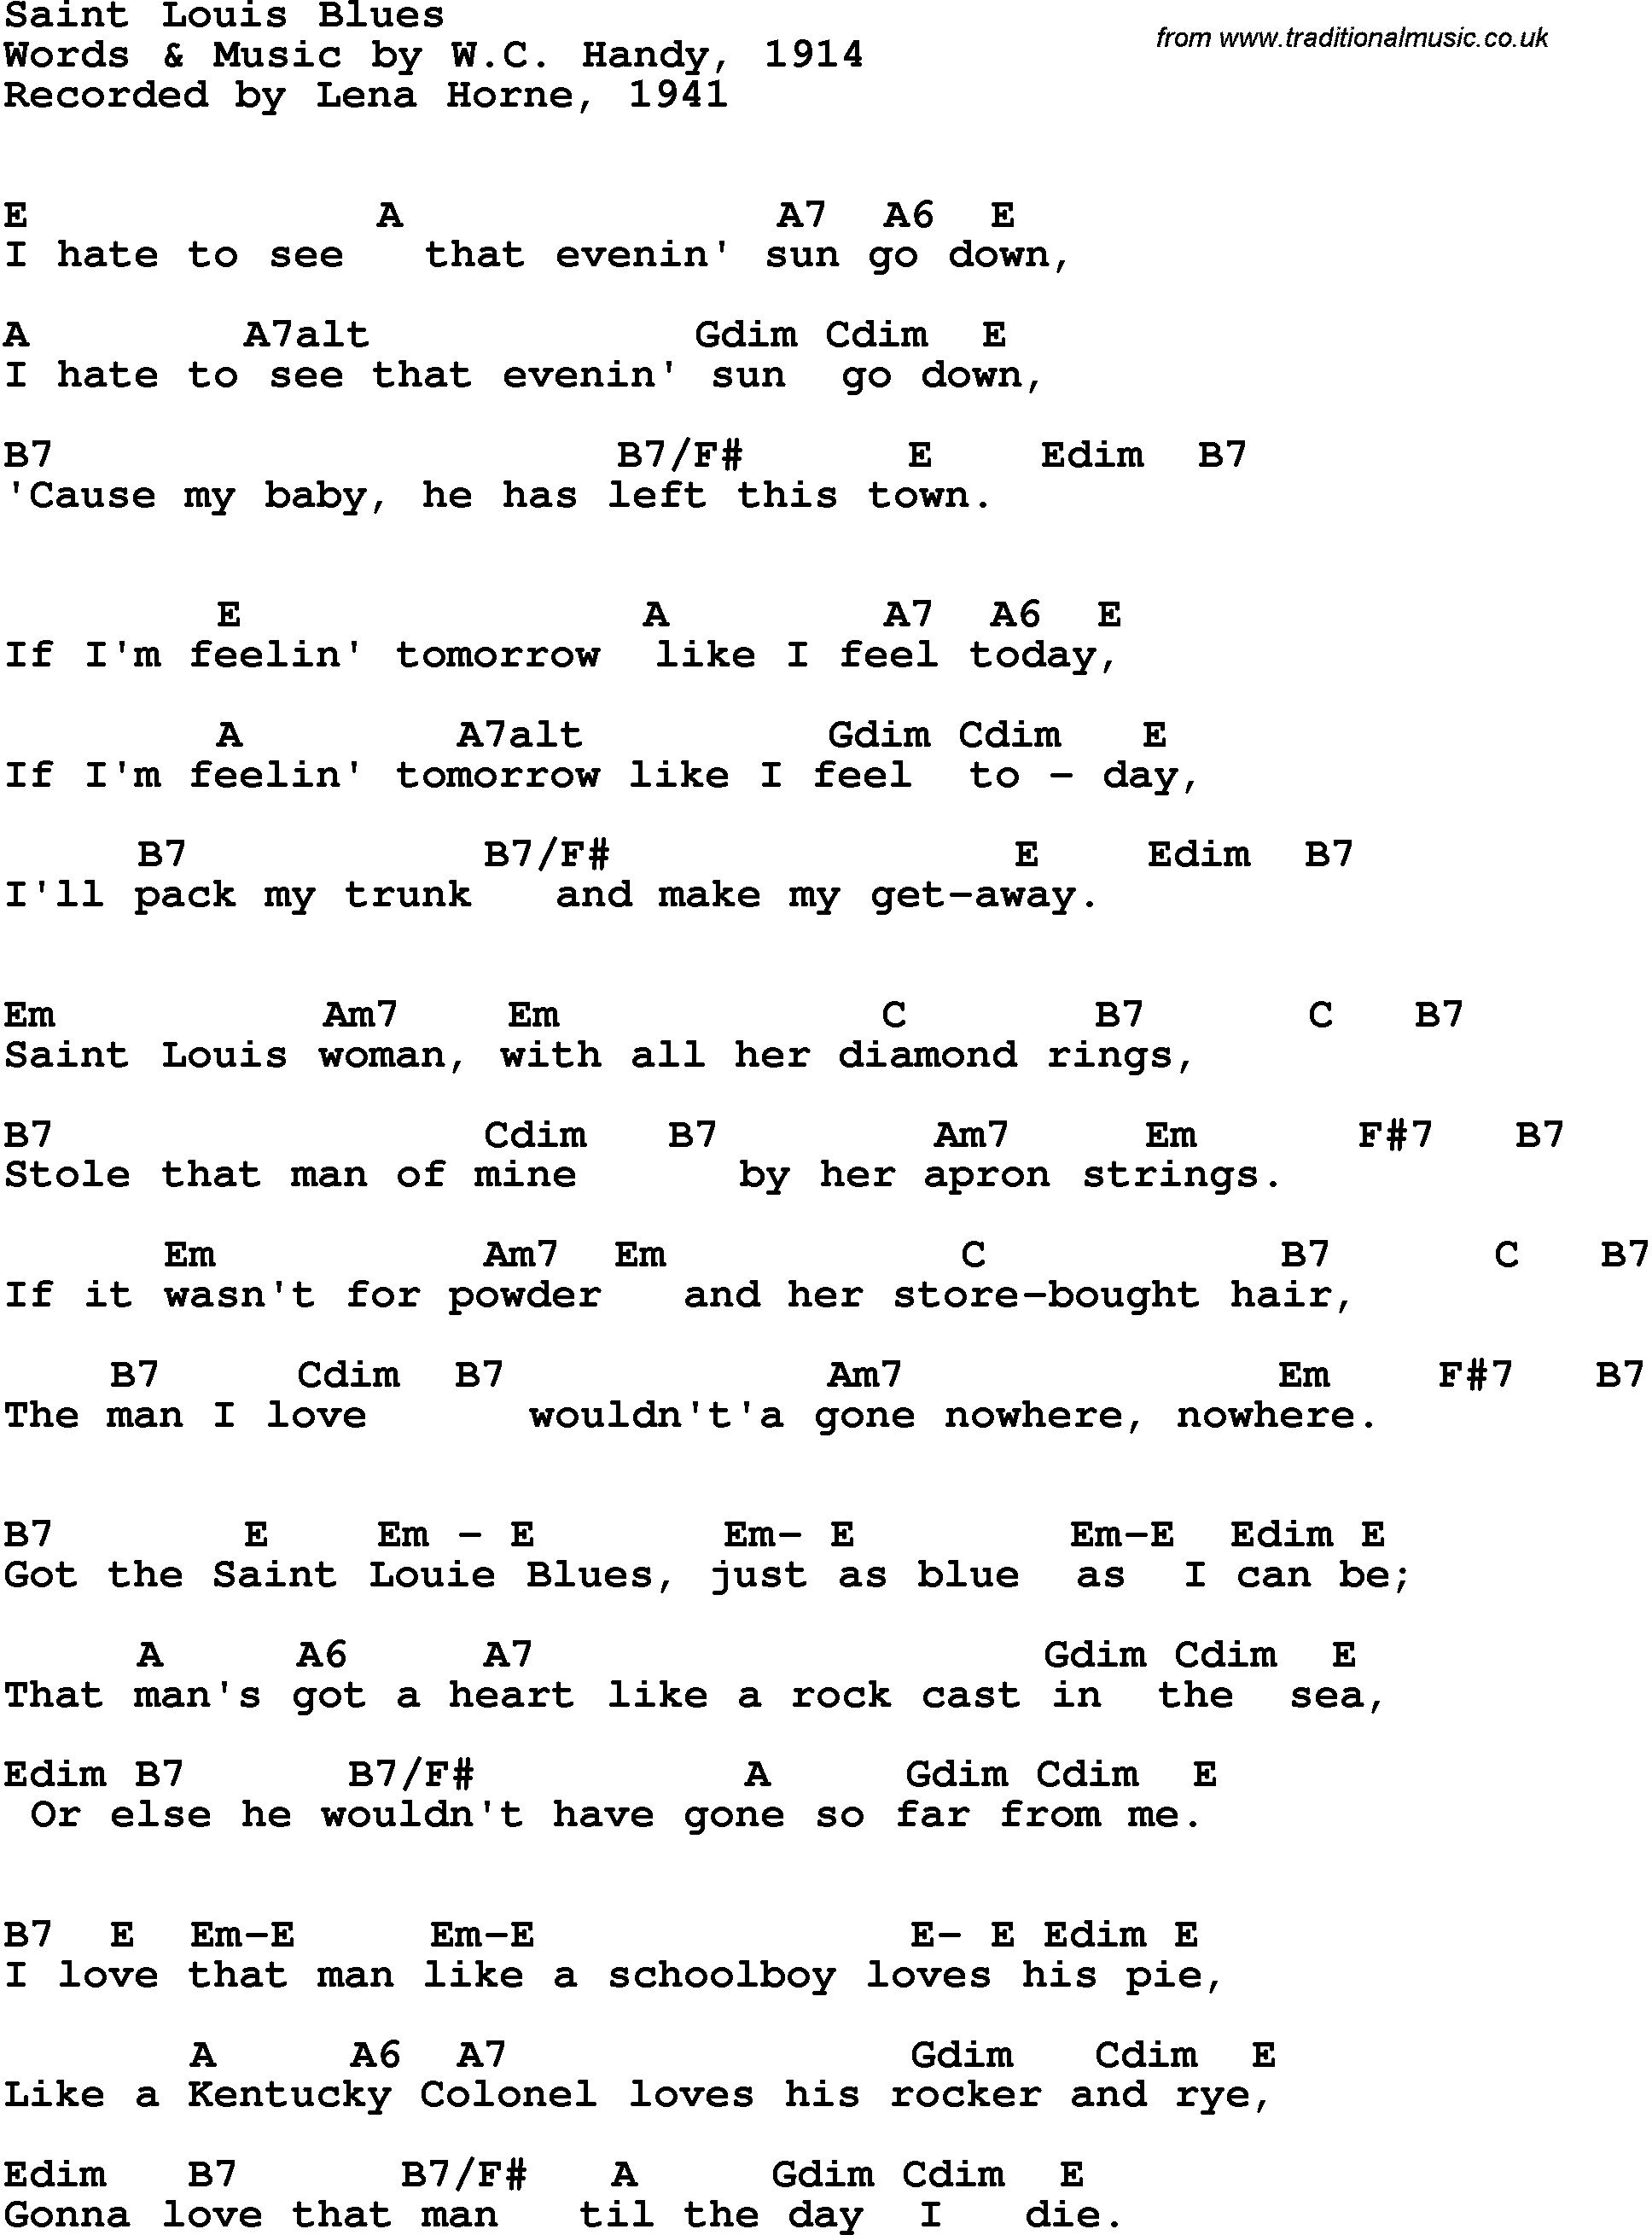 Song Lyrics with guitar chords for Saint Louis Blues - Lena Horne, 1941